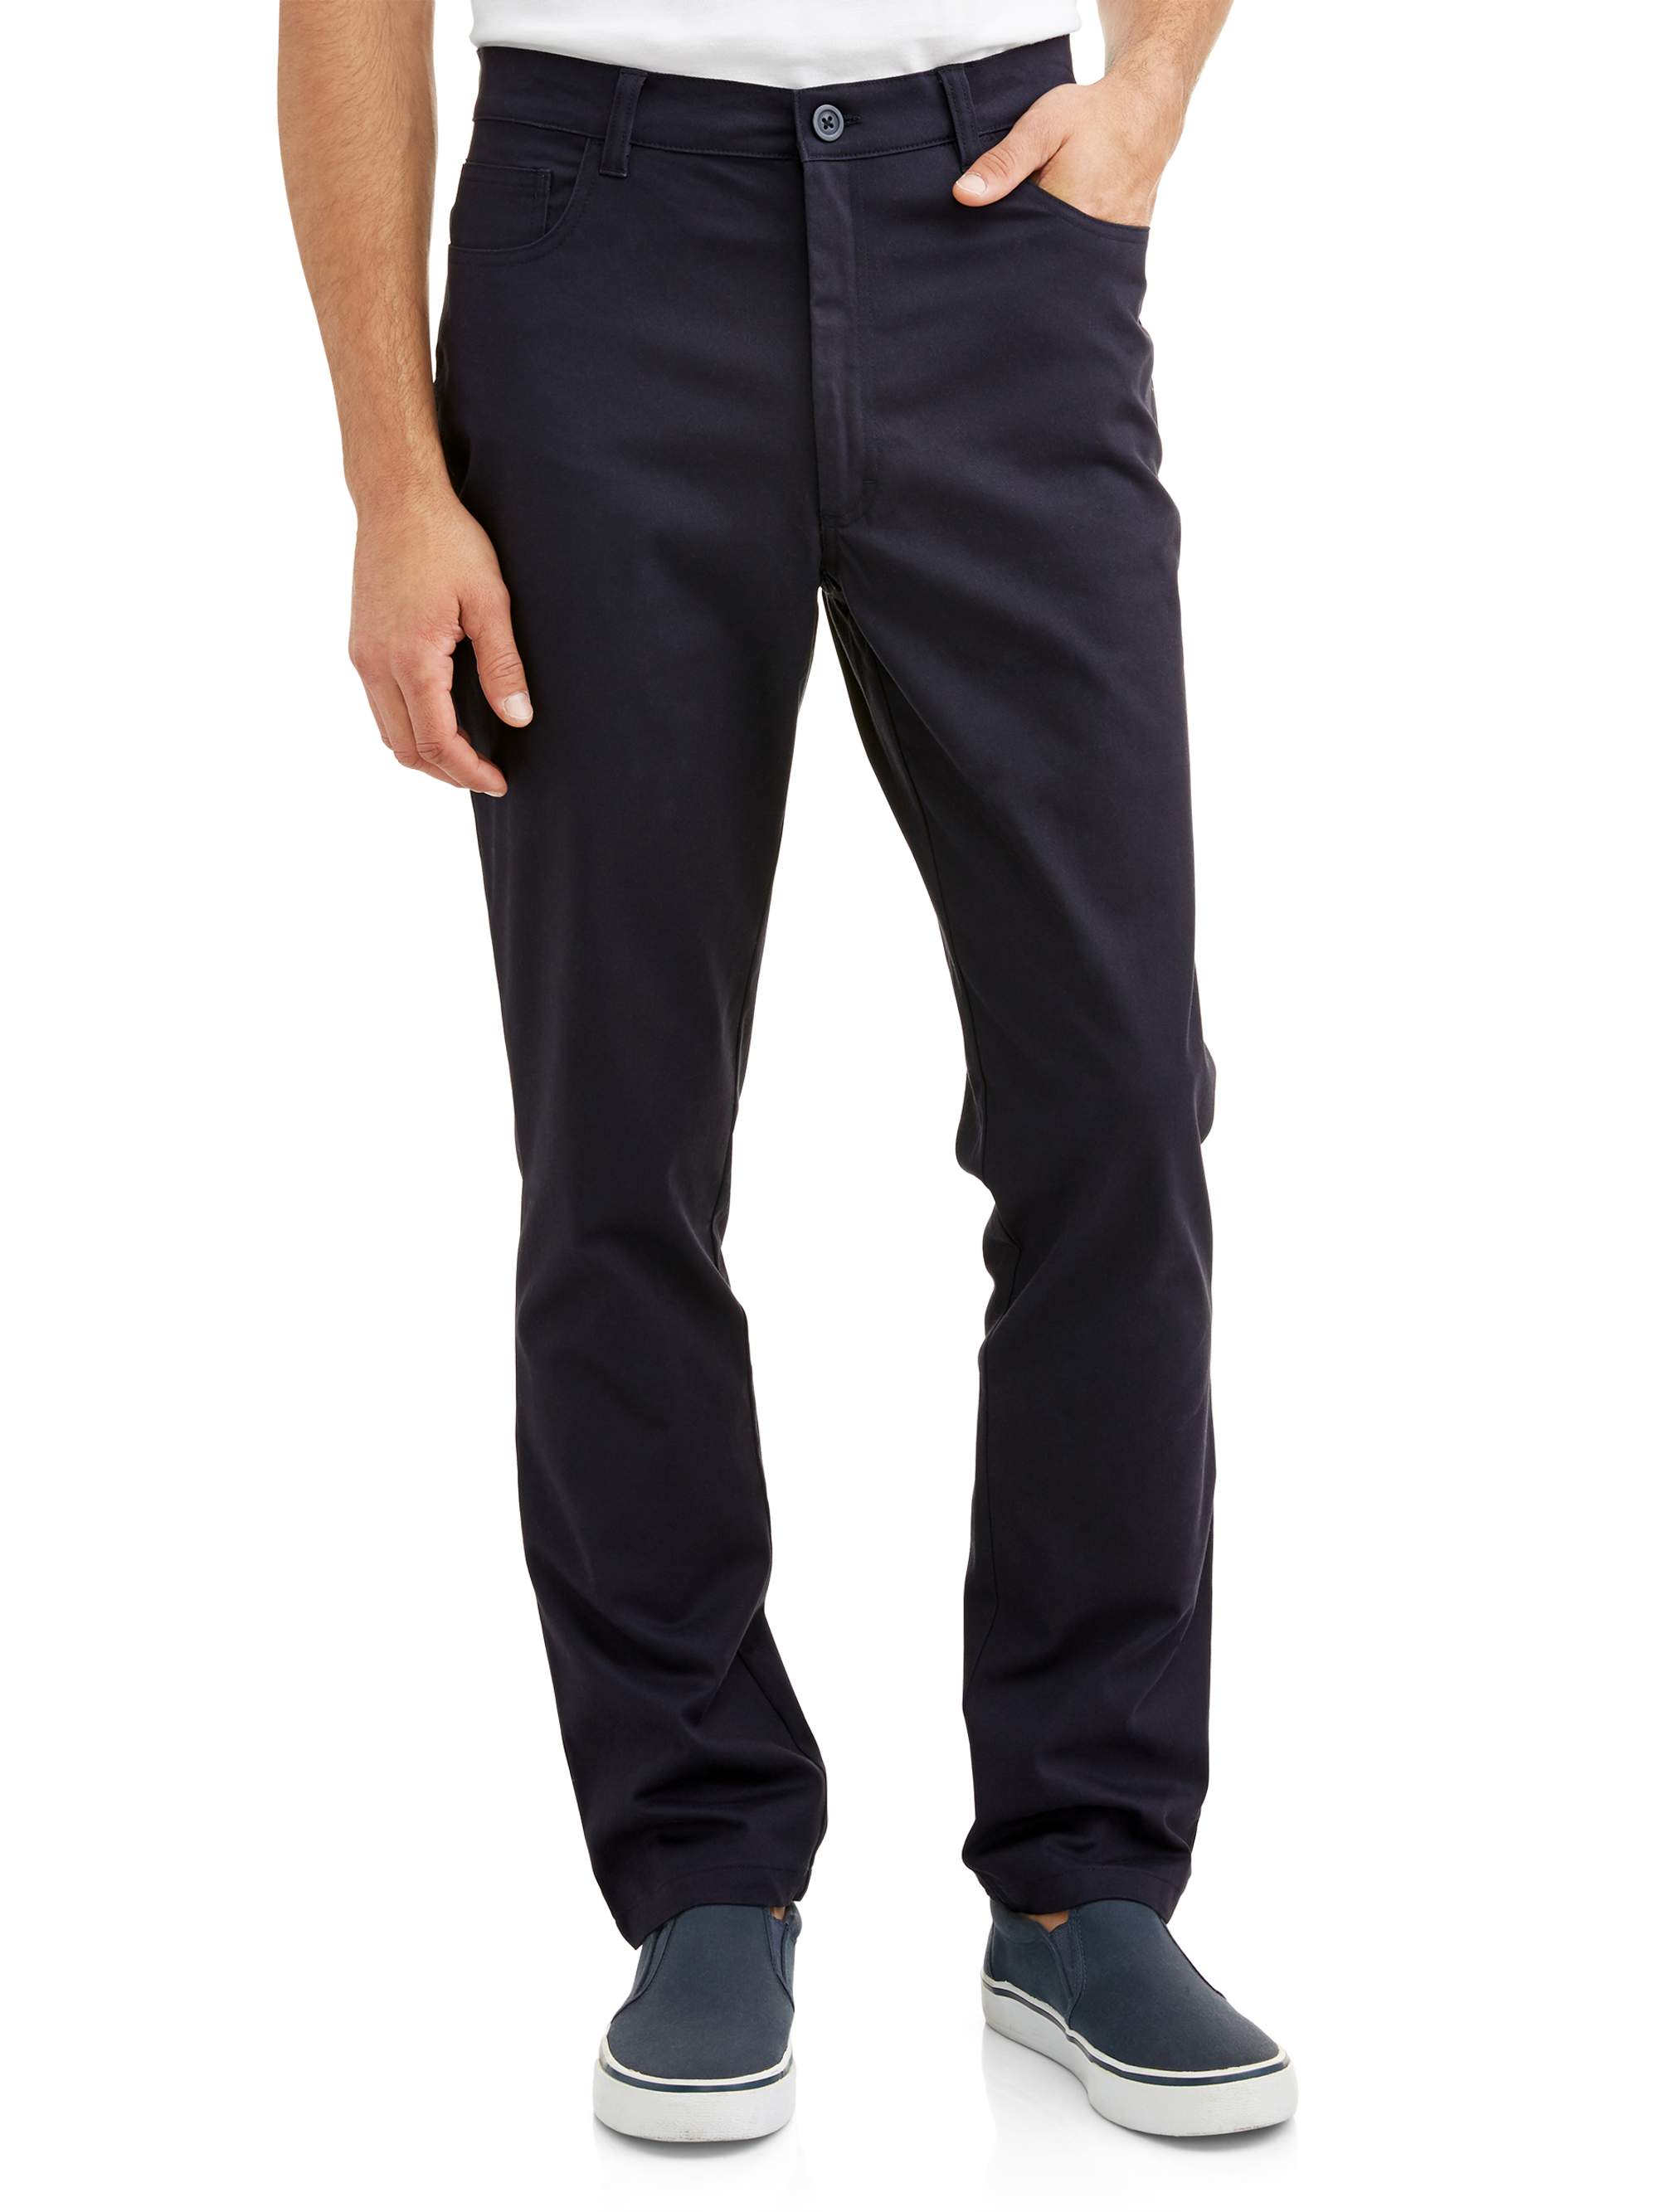 Real School Young Men's Uniform 5-Pocket Stretch Skinny Leg Pant - image 1 of 3